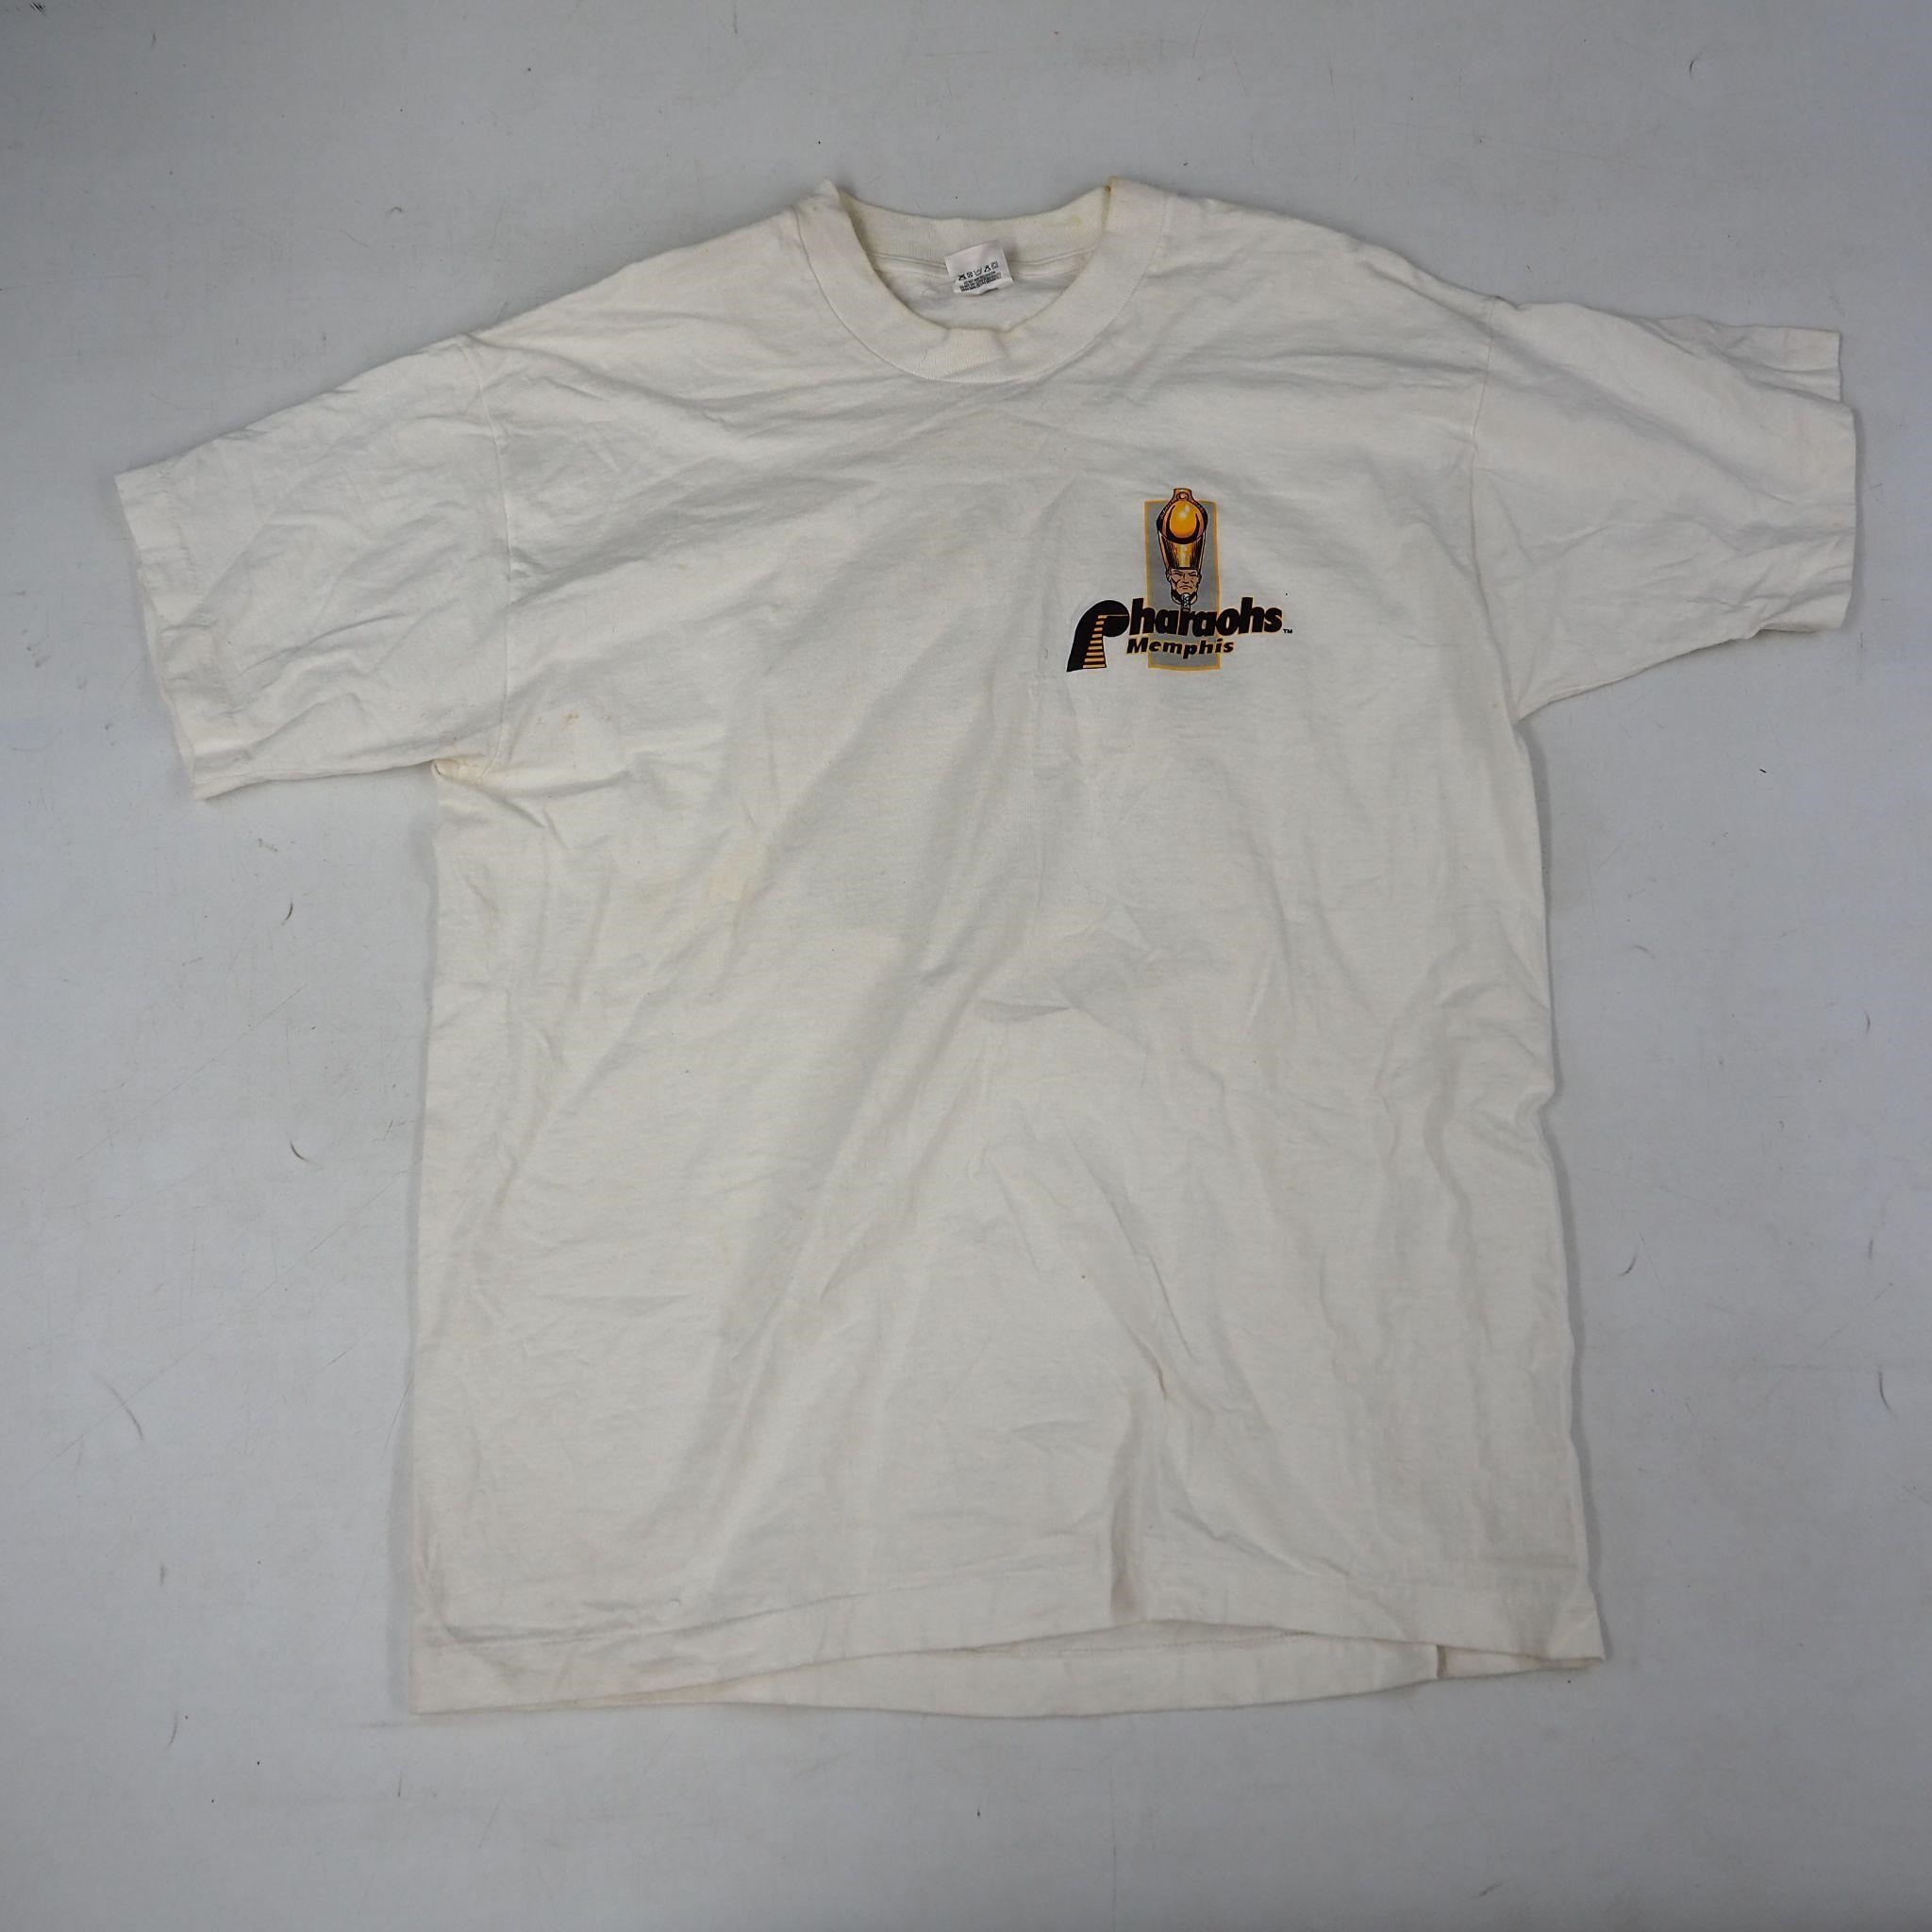 Vintage 90s Arena Football Memphis Pharaohs Shirt